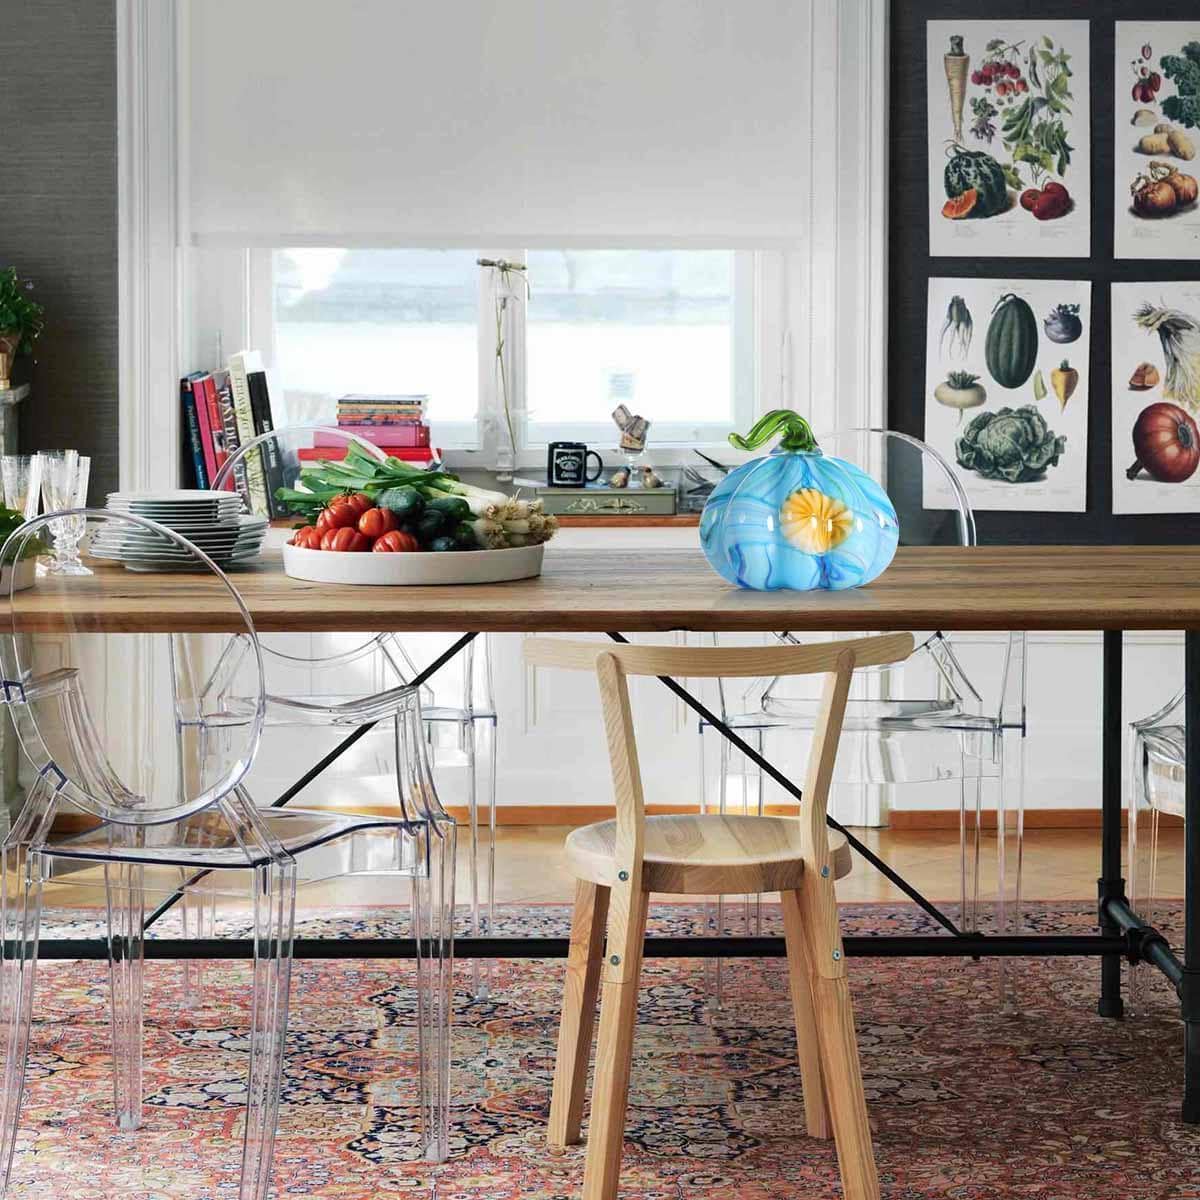 Colorful Hand-Blown Pumpkin Modern Home Decor - Unique & Cheerful Accent Piece